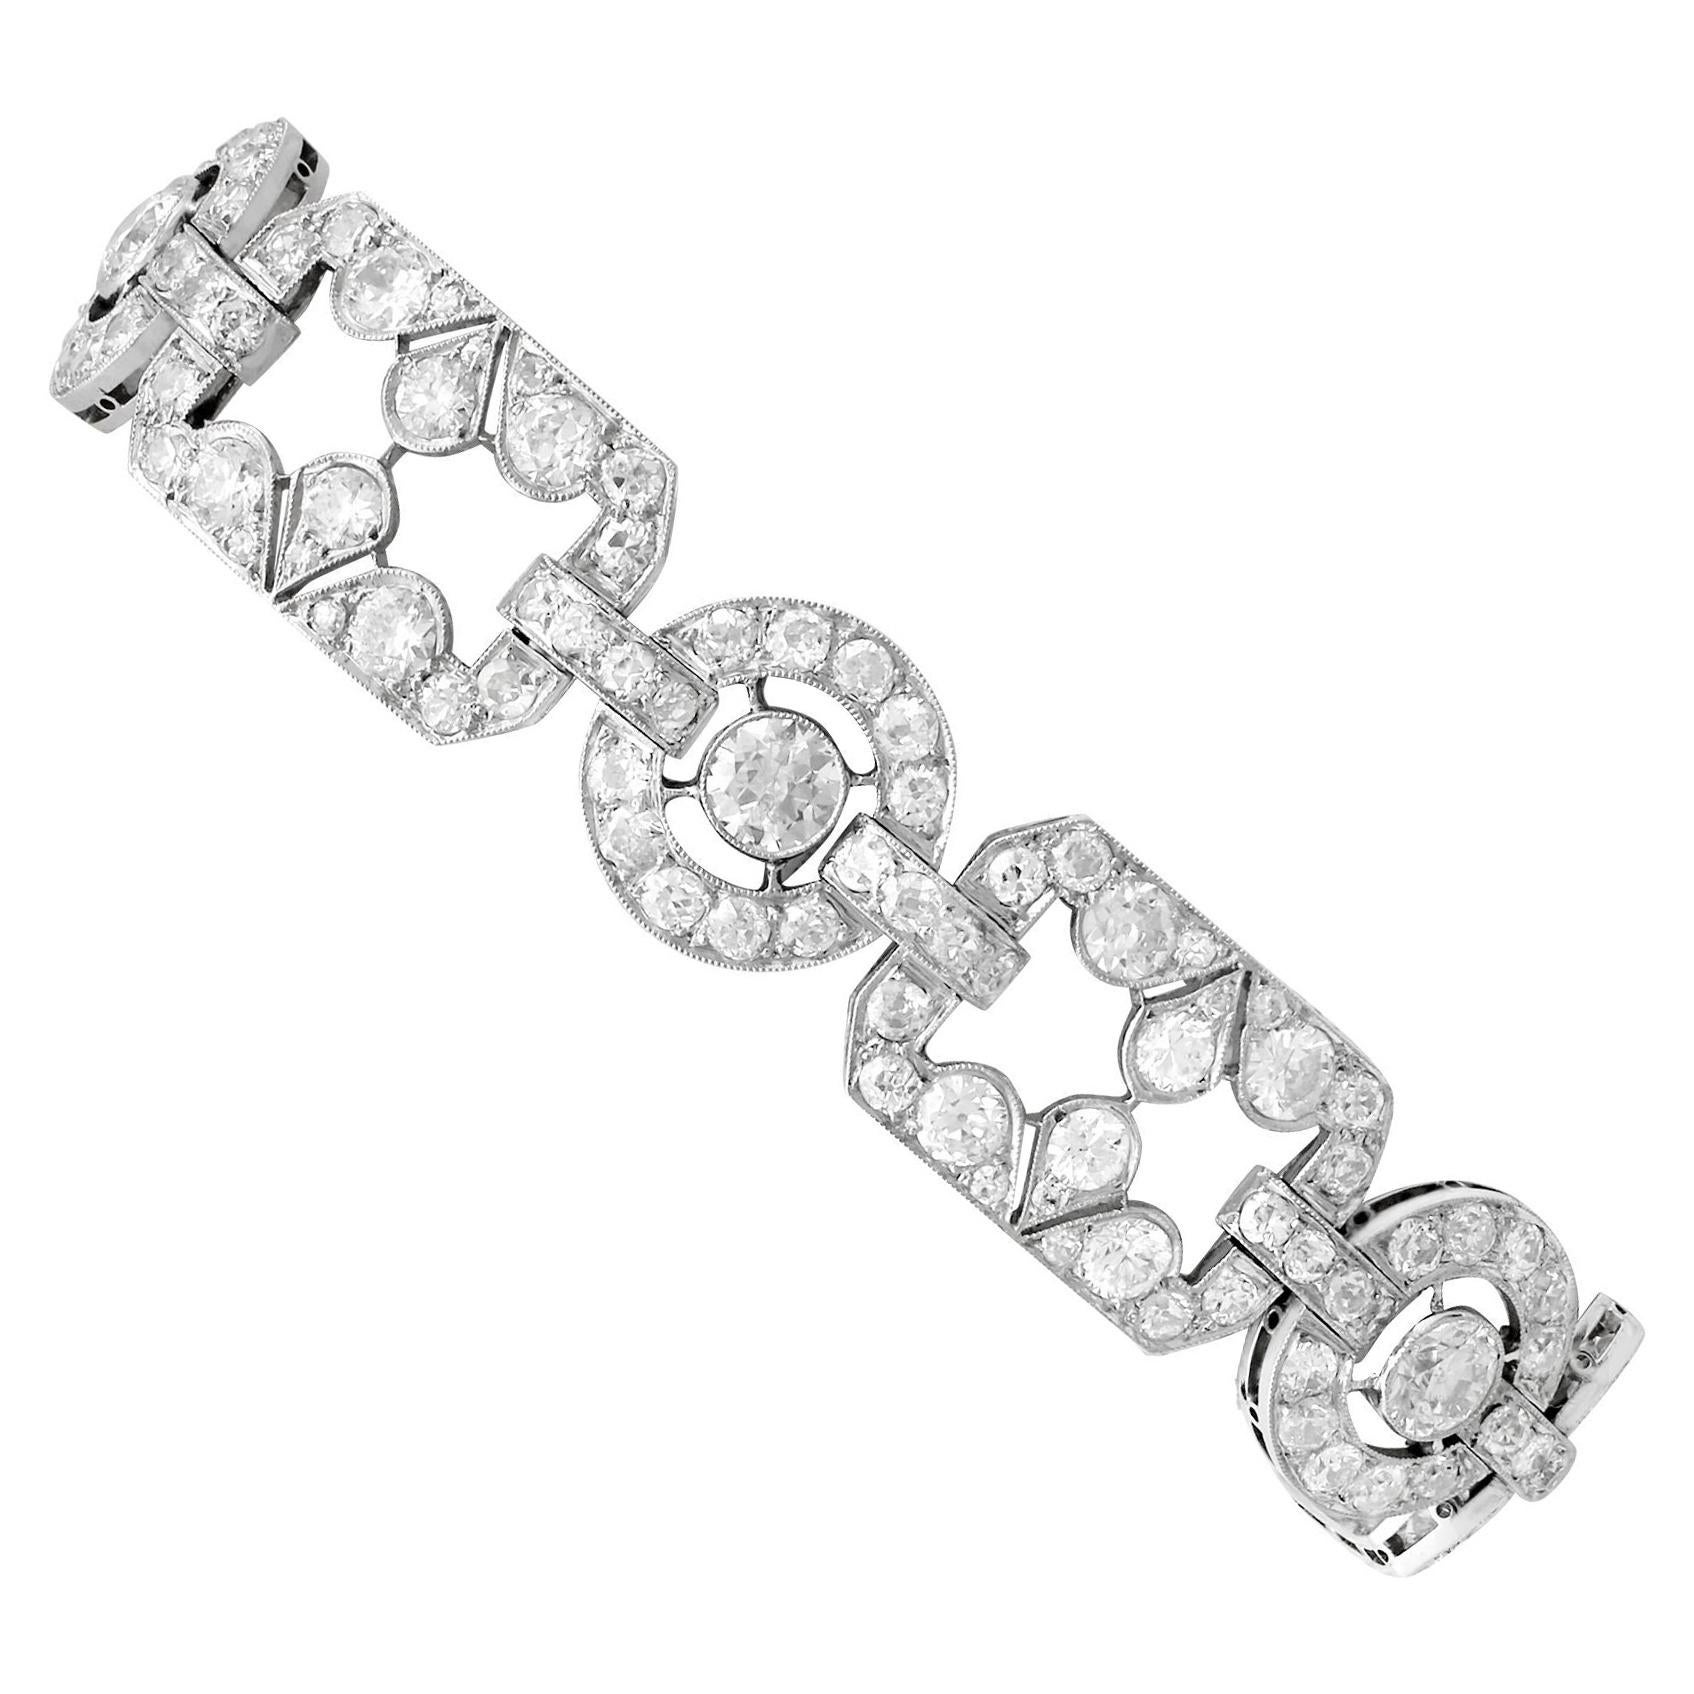 1930s Art Deco 12.29 Carat Diamond and Platinum Bracelet